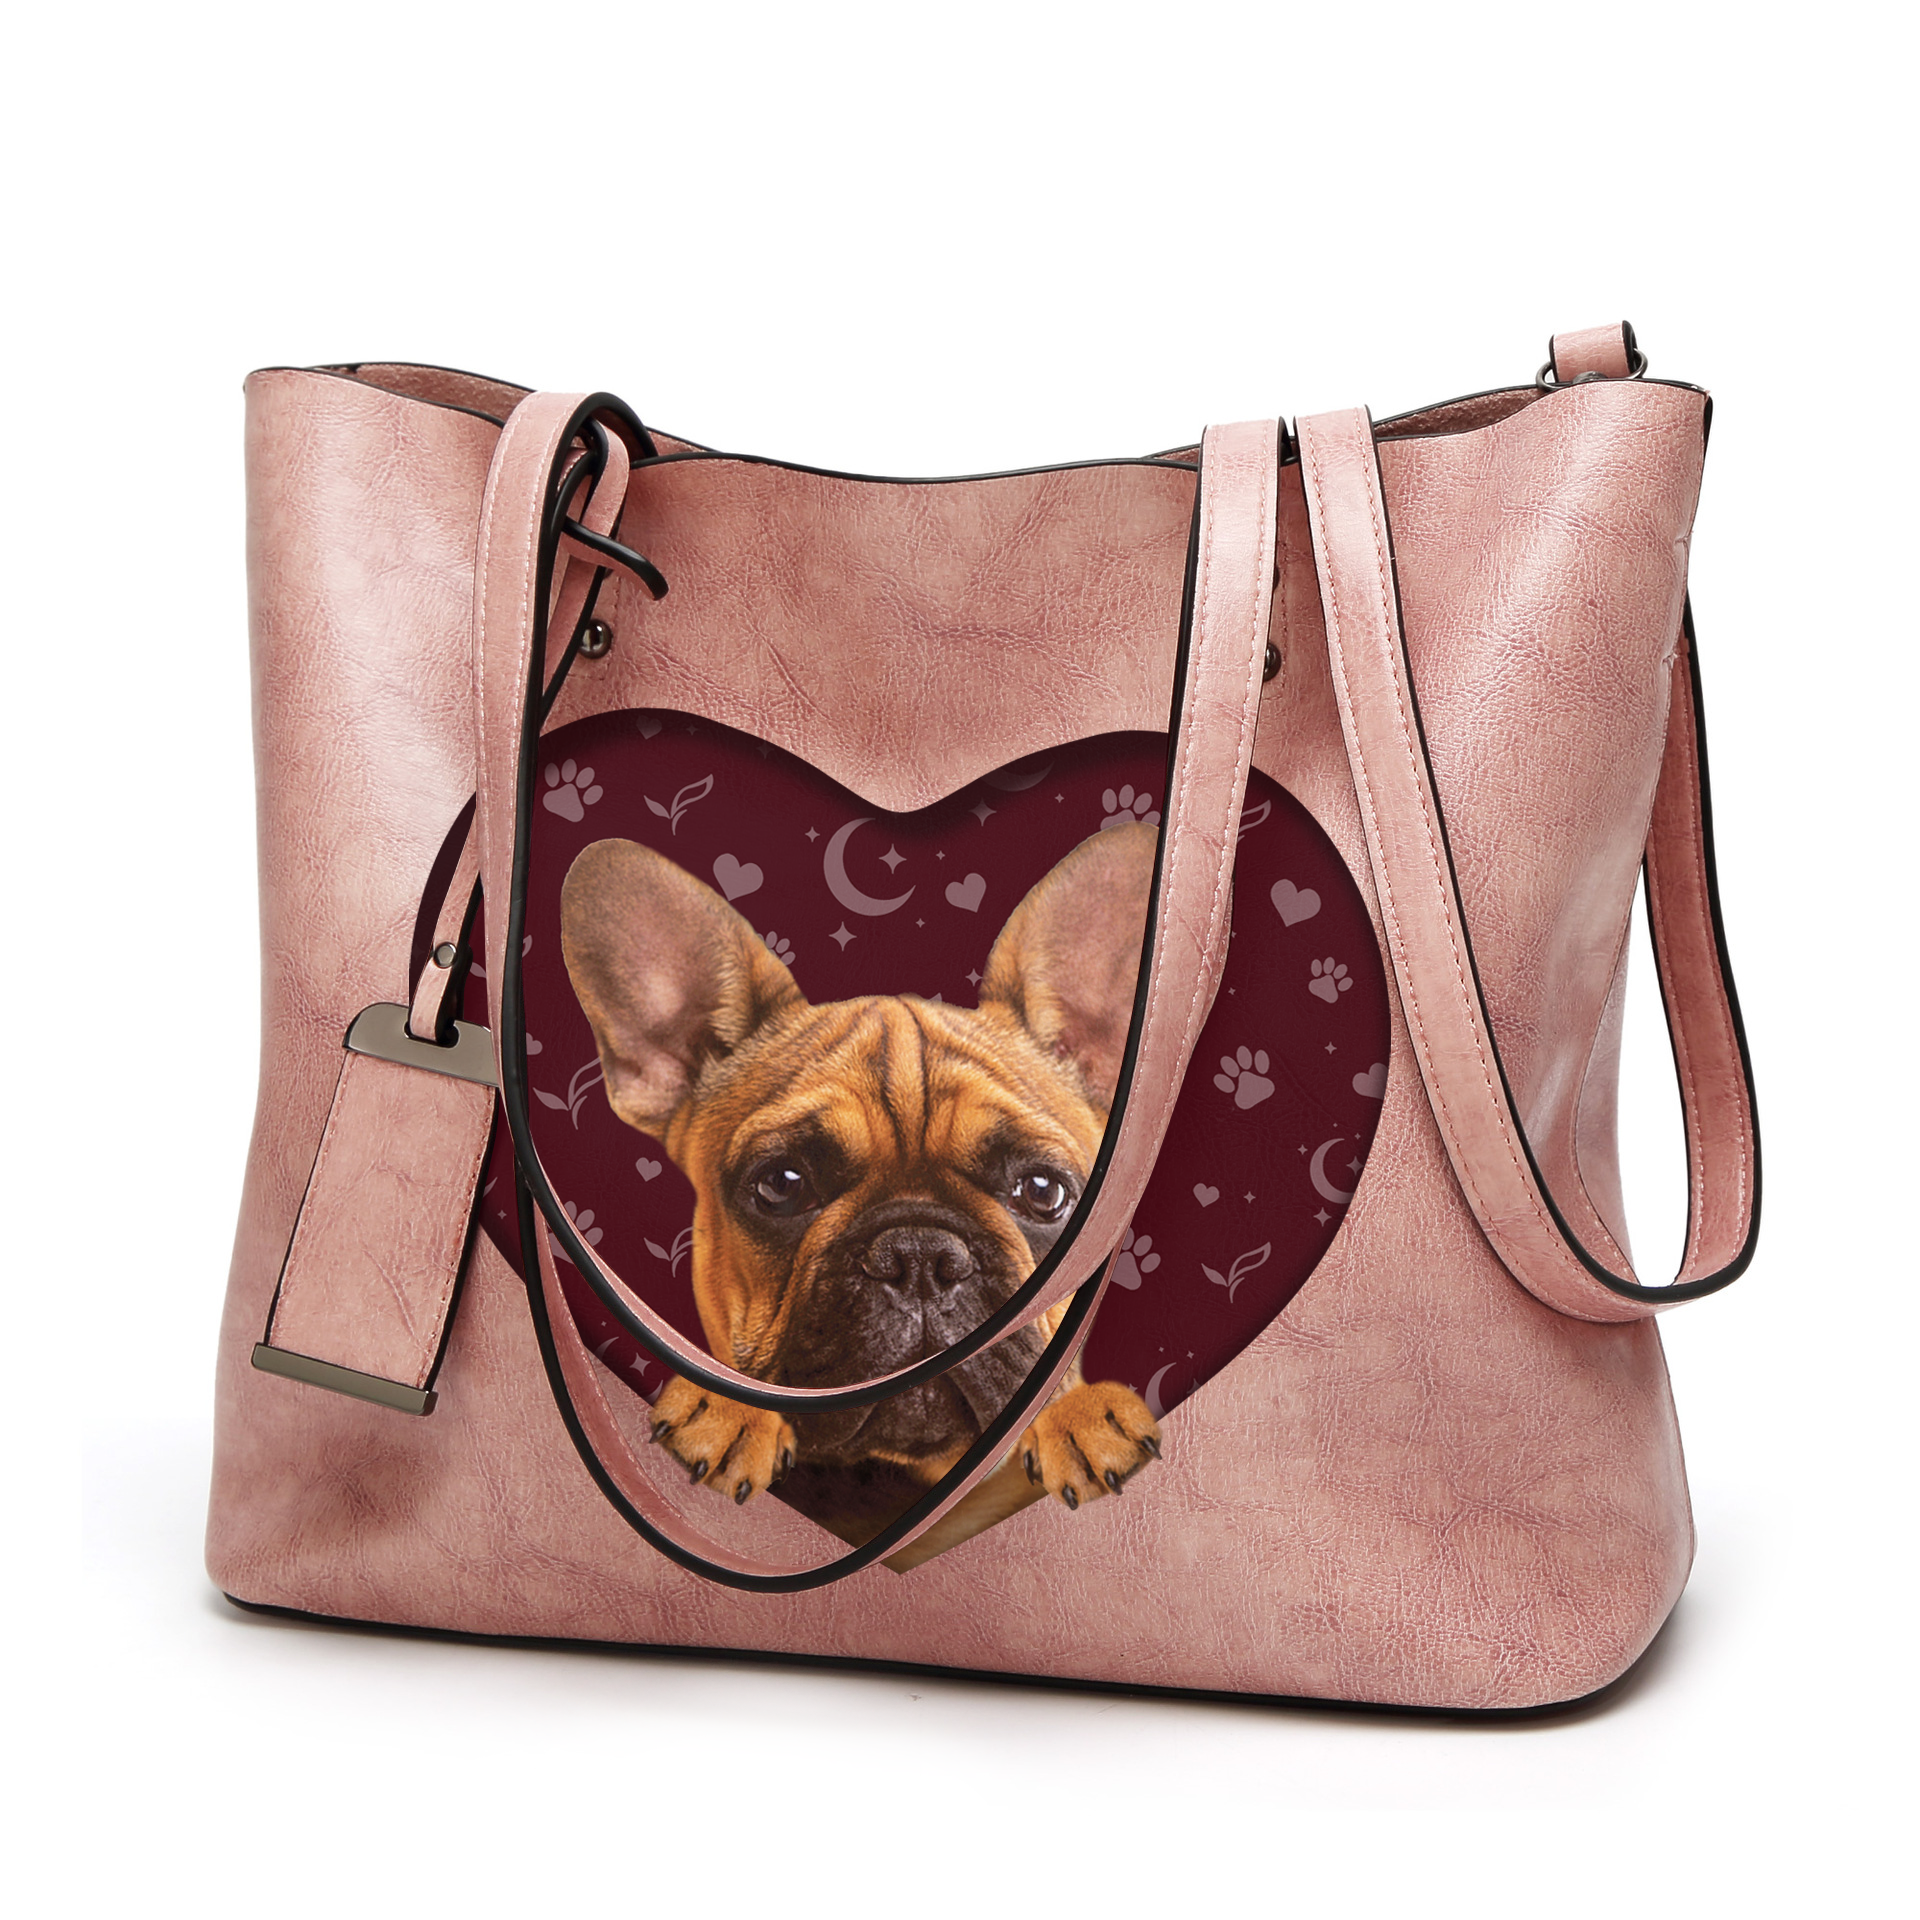 I Know I'm Cute - French Bulldog Glamour Handbag V1 - 8